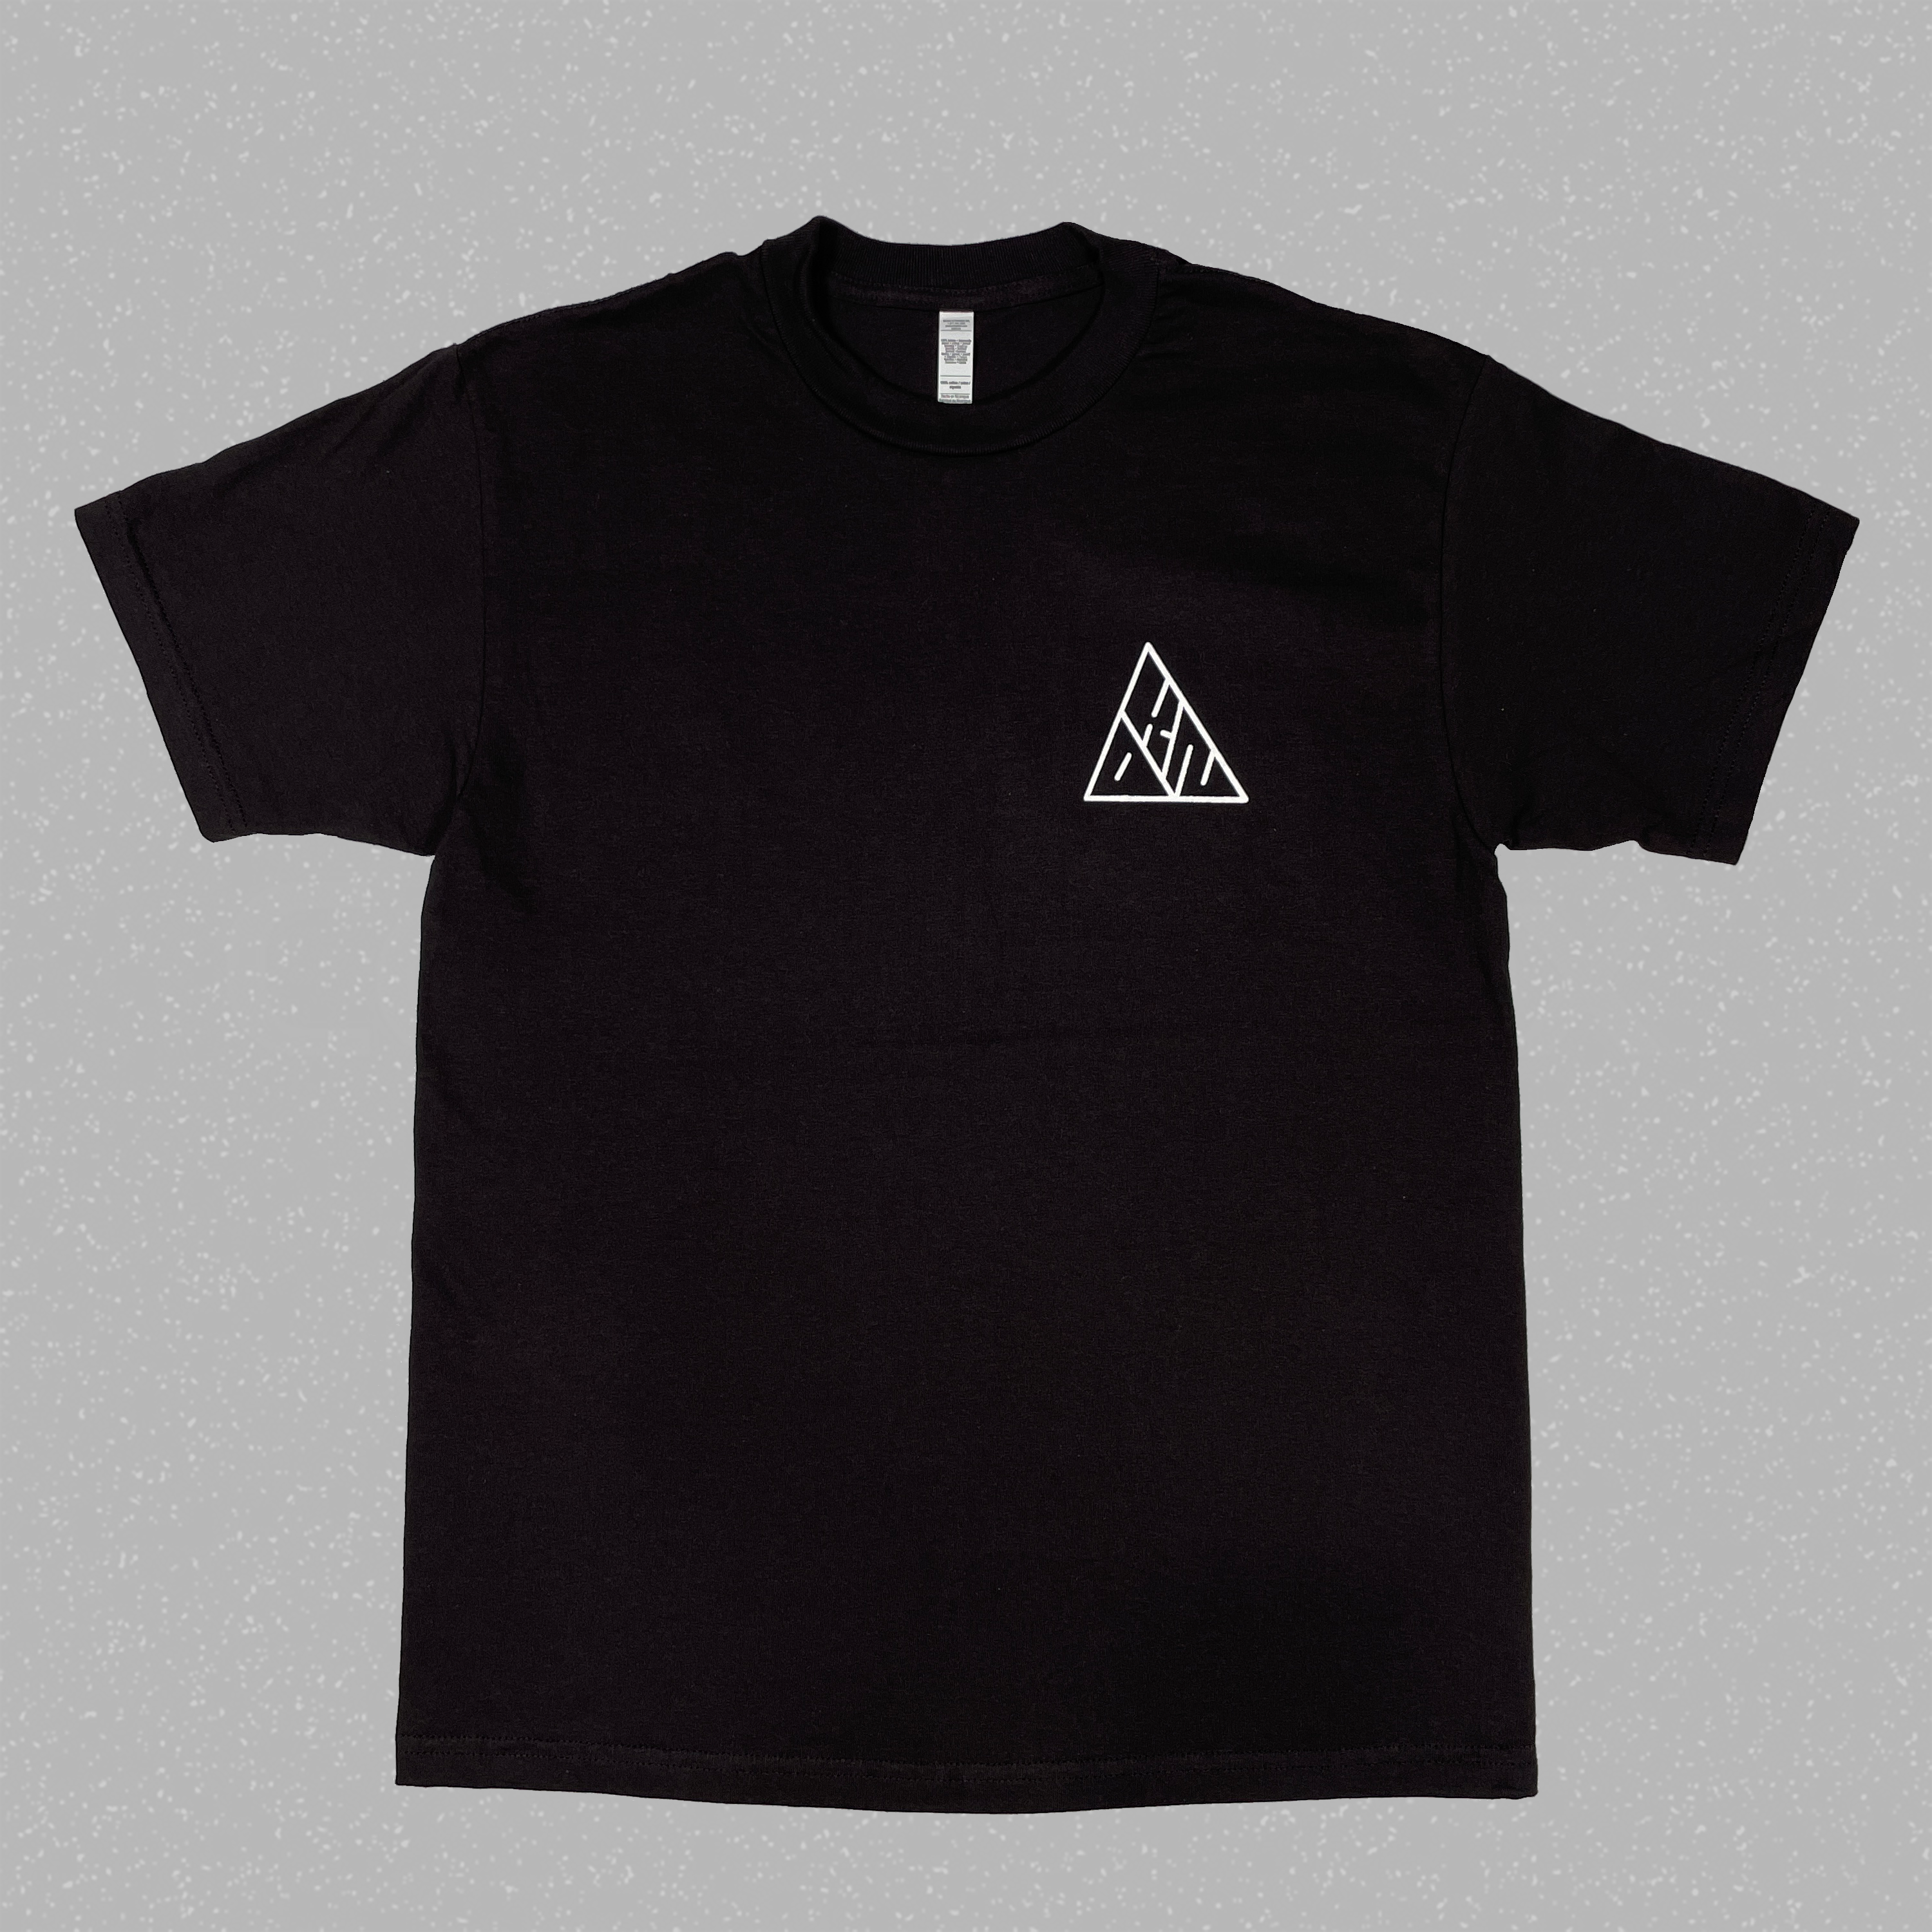 SALE - The Kindness Pyramid T-Shirt Black